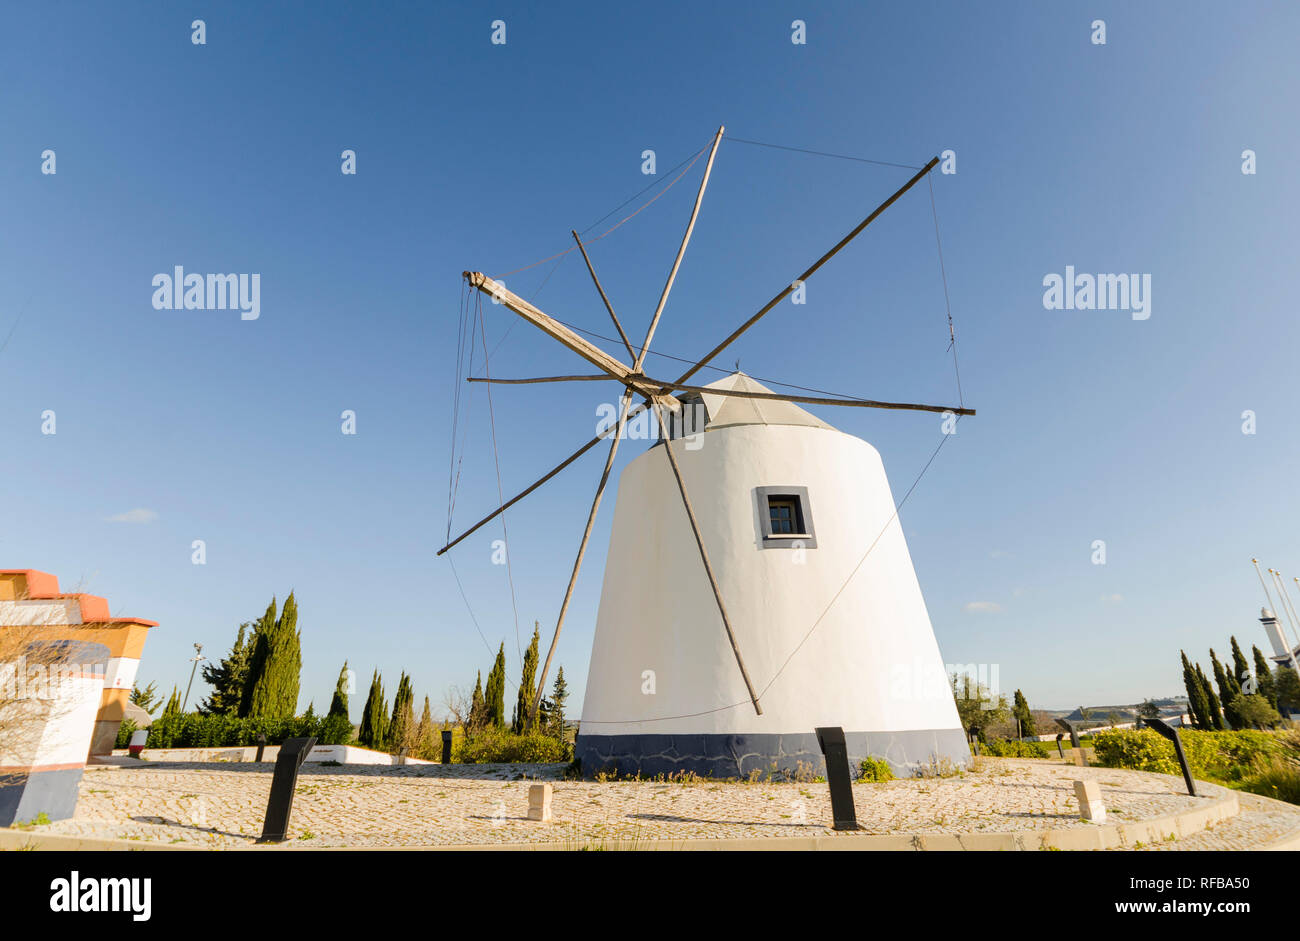 An old style windmill Moinho de Vento in a rural area in Algarve